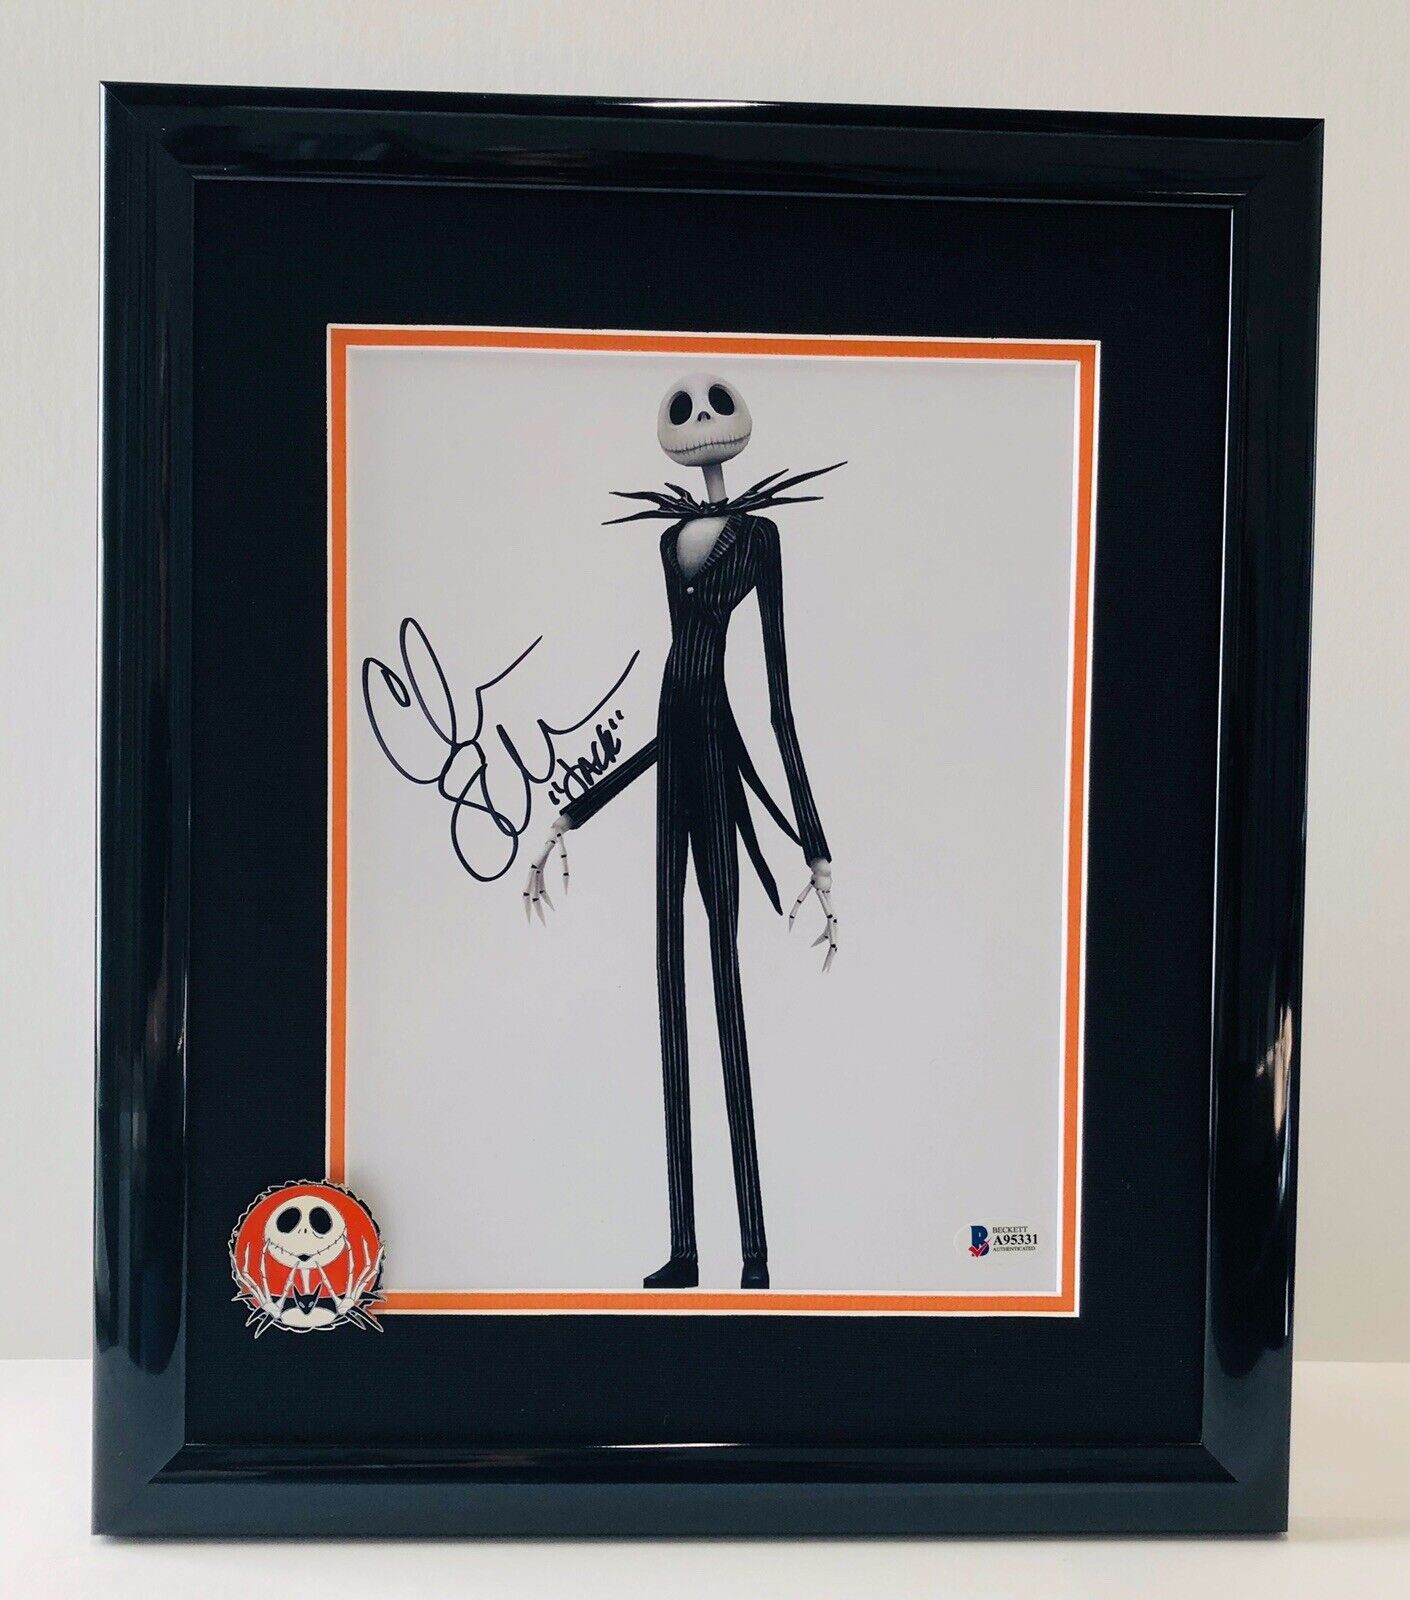 Chris Sarandon Signed Autographed Jack Skillington 13x15 Framed Photo Poster painting Beckett